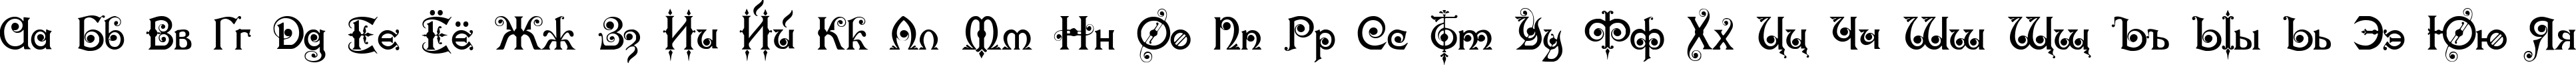 Пример написания русского алфавита шрифтом Karnac Two